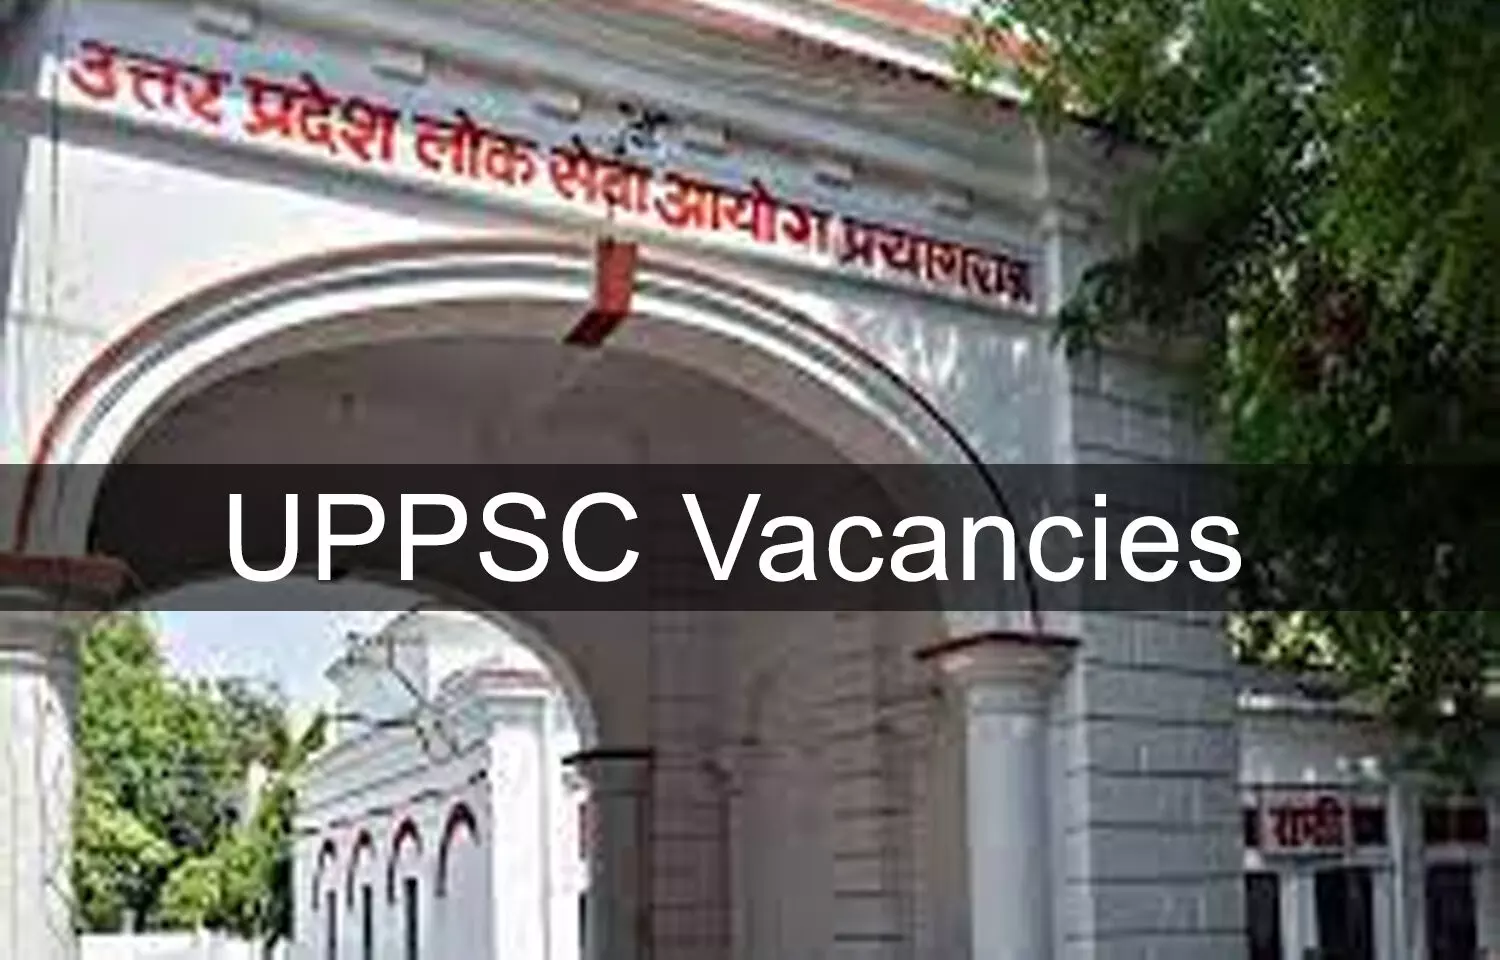 JOB ALERT At UPPSC: 119 Vacancies For Assistant Professor Post released, details